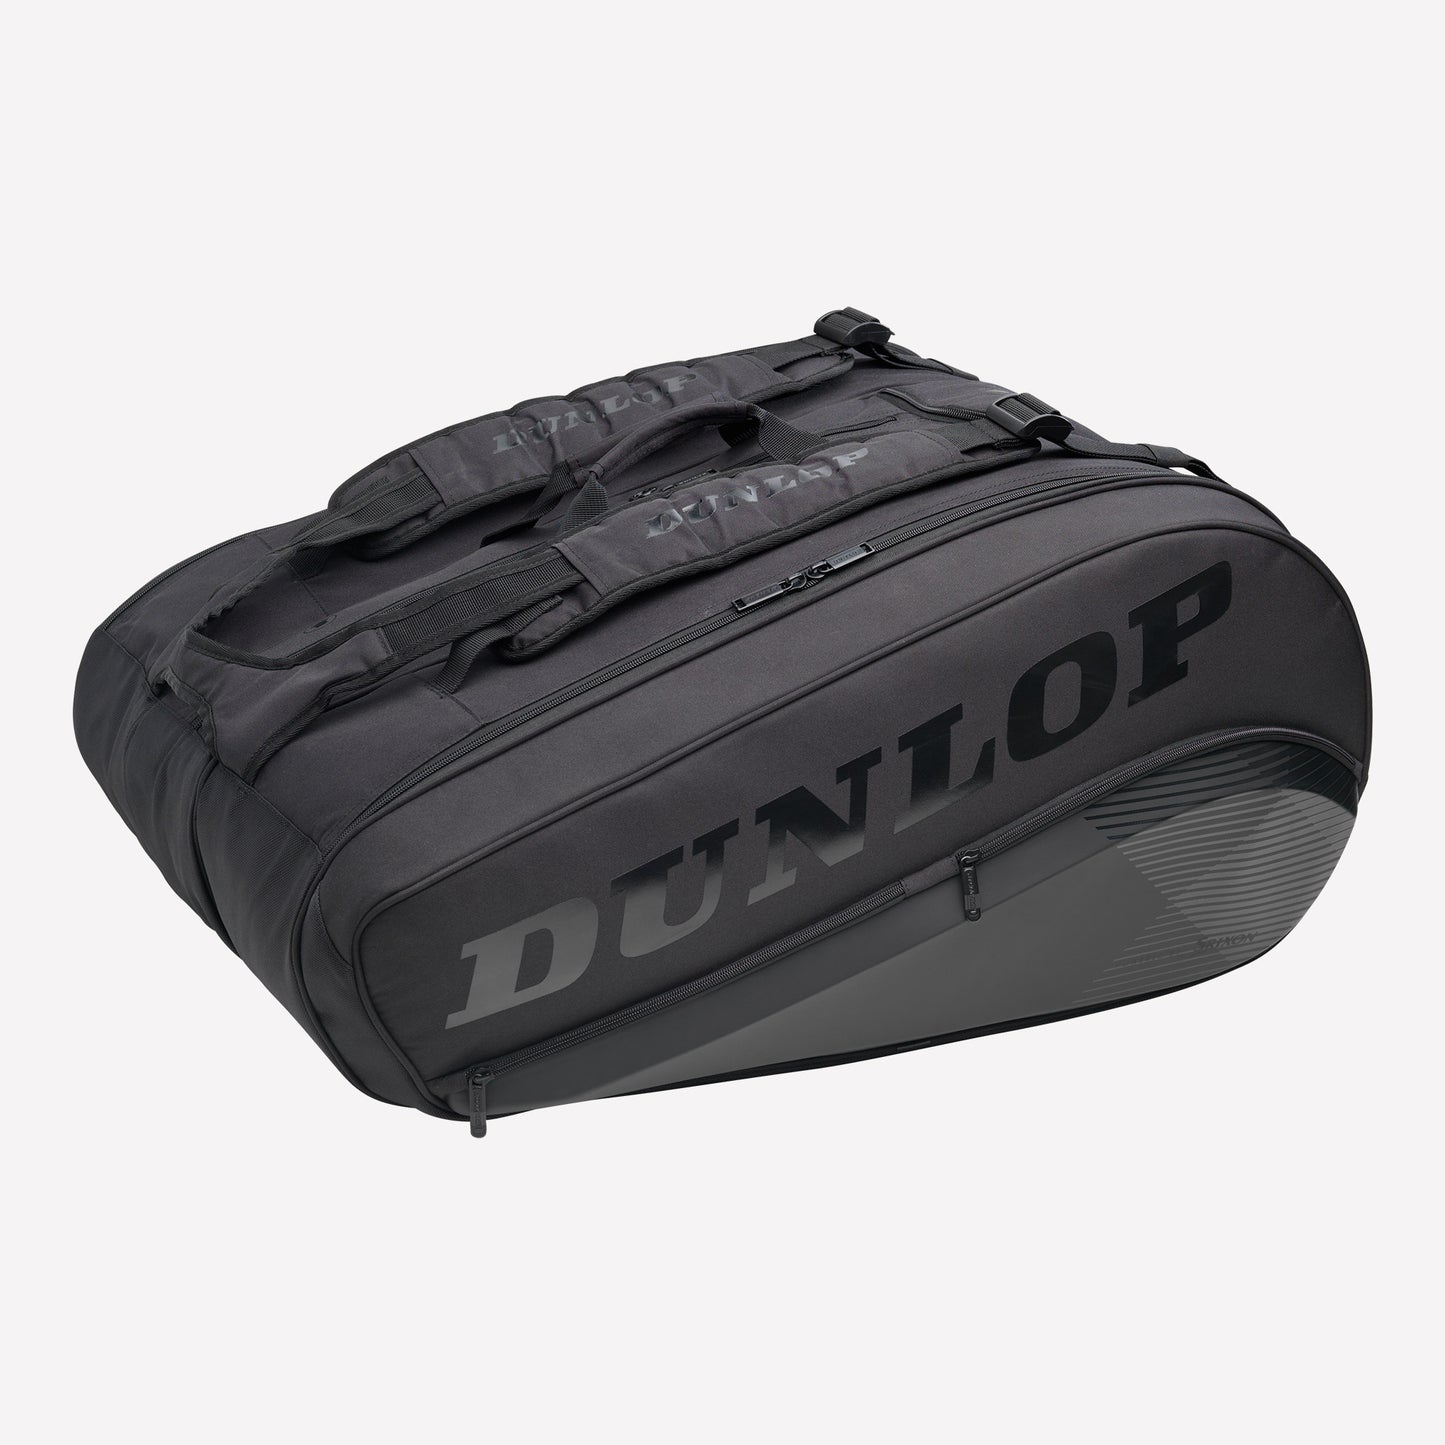 Dunlop CX Performance 12R Tennis Thermo Bag Black (1)